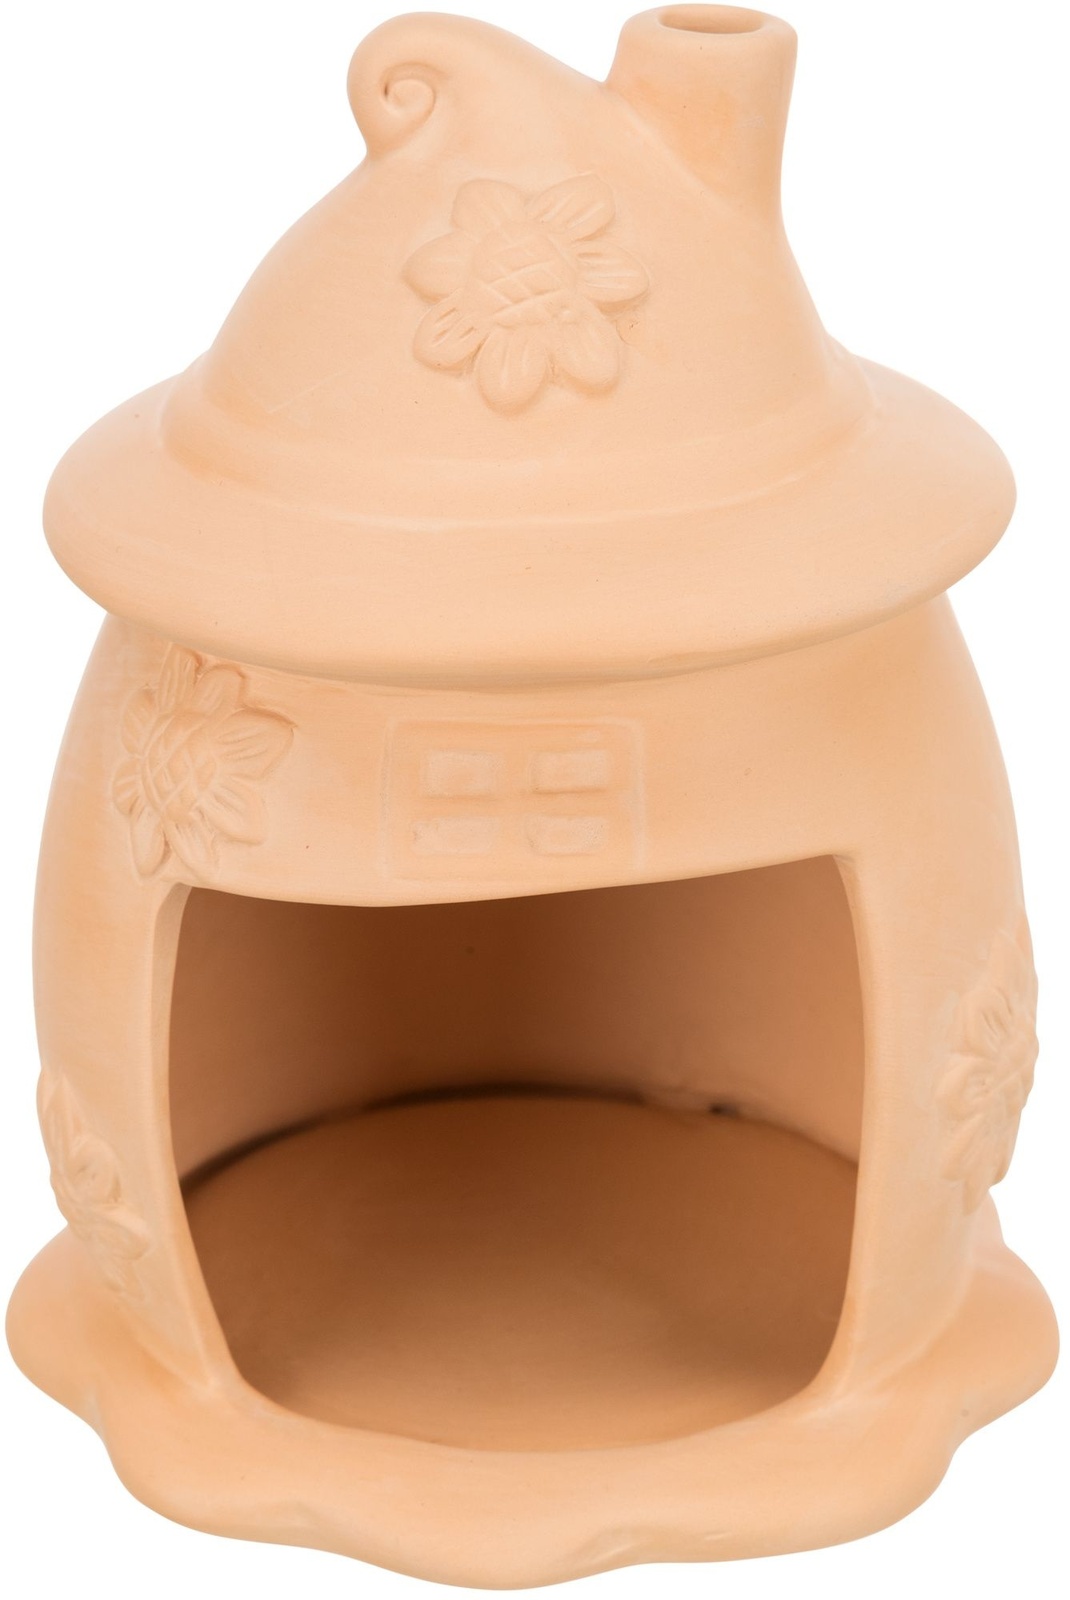 Trixie Trixie домик для мышей, керамика, терракотовый (330 г) trixie trixie домик для мышей и хомяков керамика 11 x 6 x 10 см терракотовый 275 г